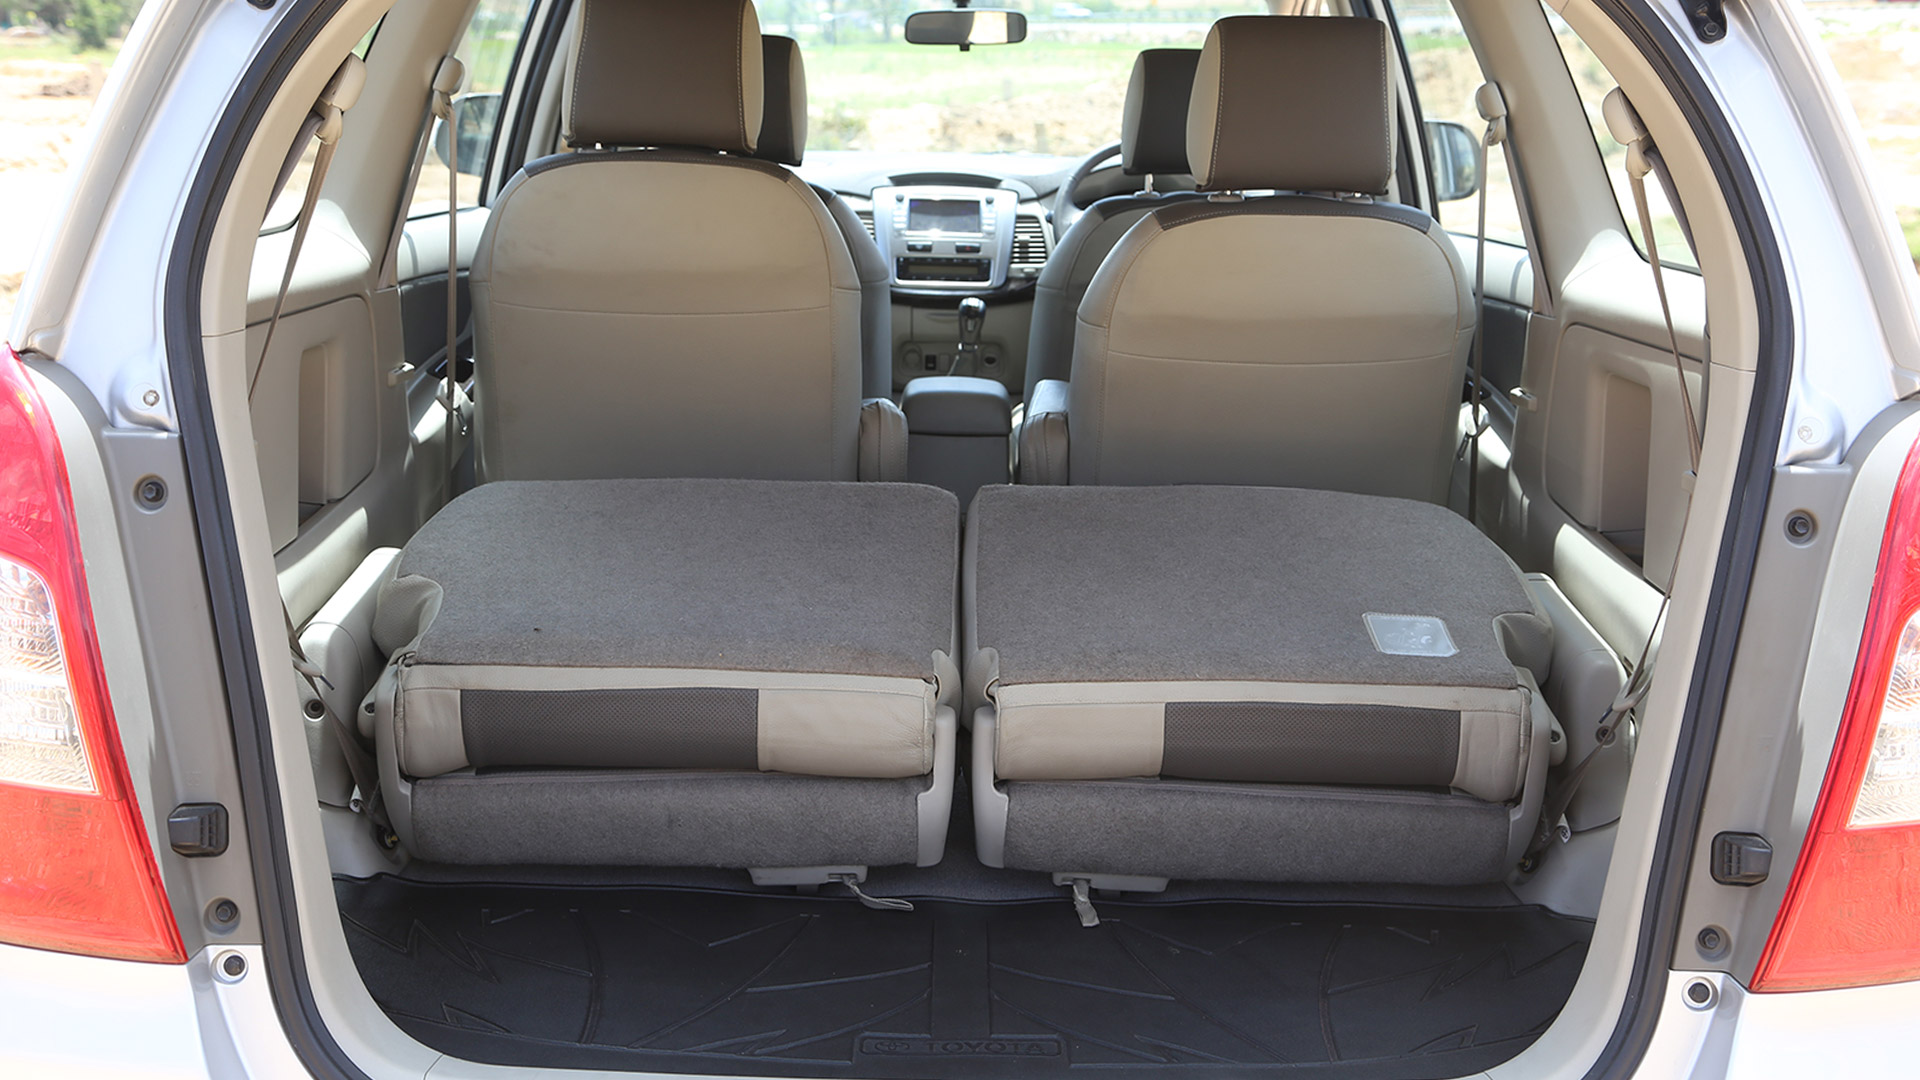 Toyota Innova 2015 2 5g 7 Seater Interior Car Photos Overdrive